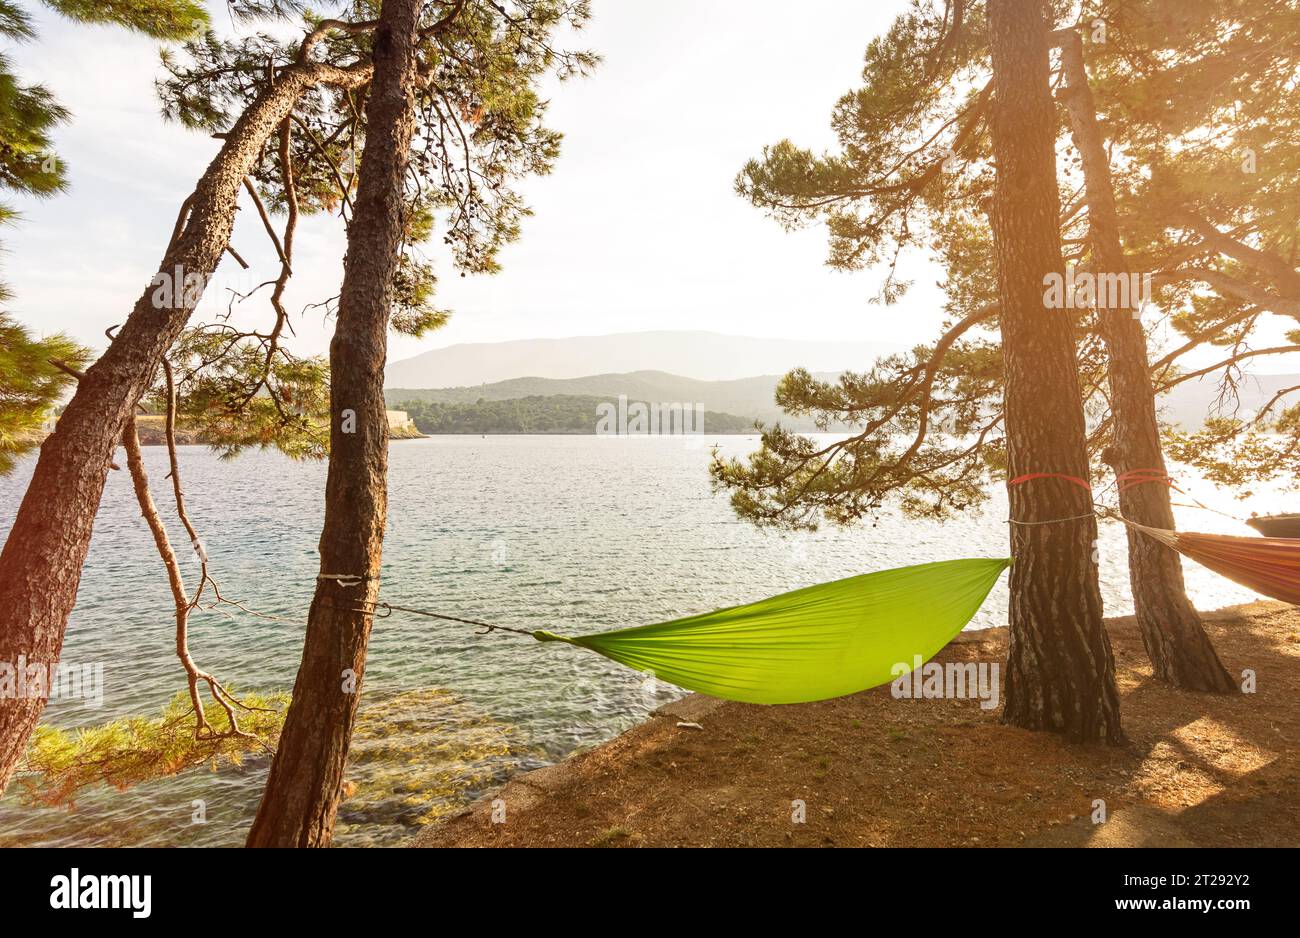 Hammock between pine trees in scenic bay (Osor) on the island of Losinj in the Adriatic Sea, Croatia Stock Photo